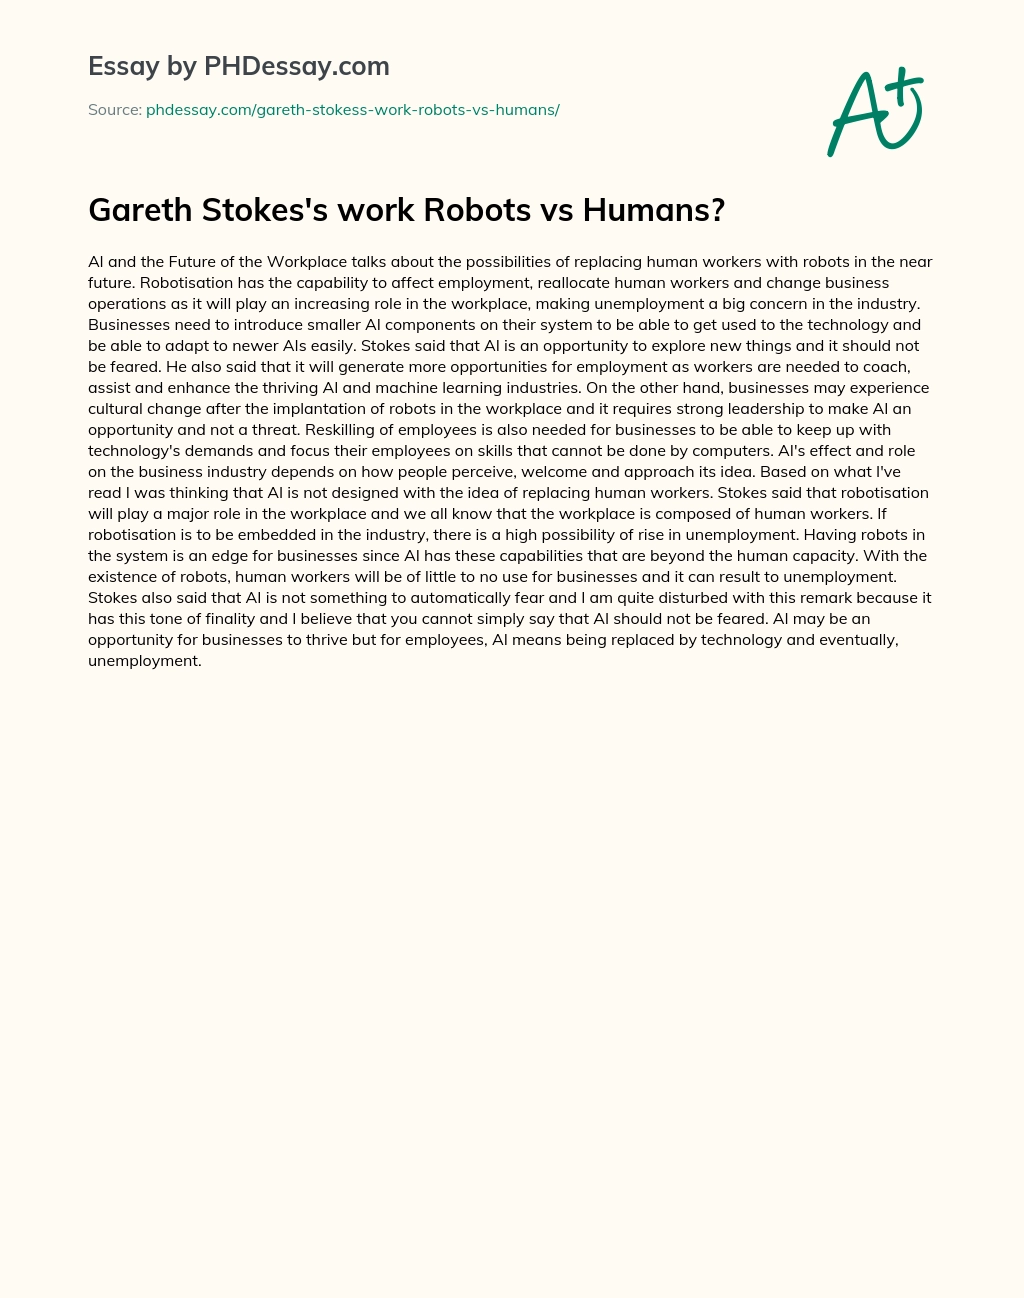 Gareth Stokes’s work Robots vs Humans? essay